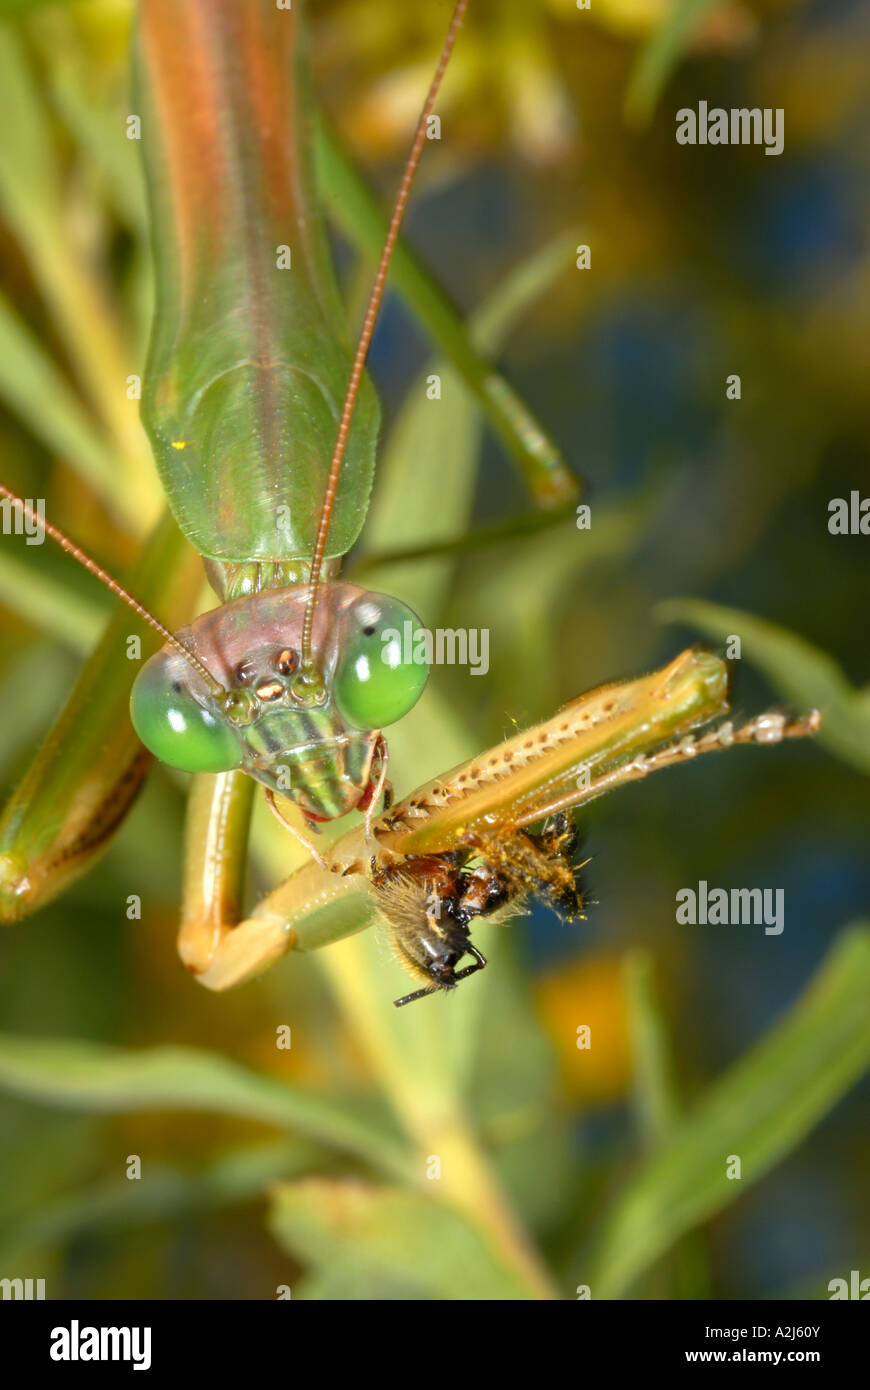 Praying mantis Tenodera aridifolia eating a honeybee Stock Photo